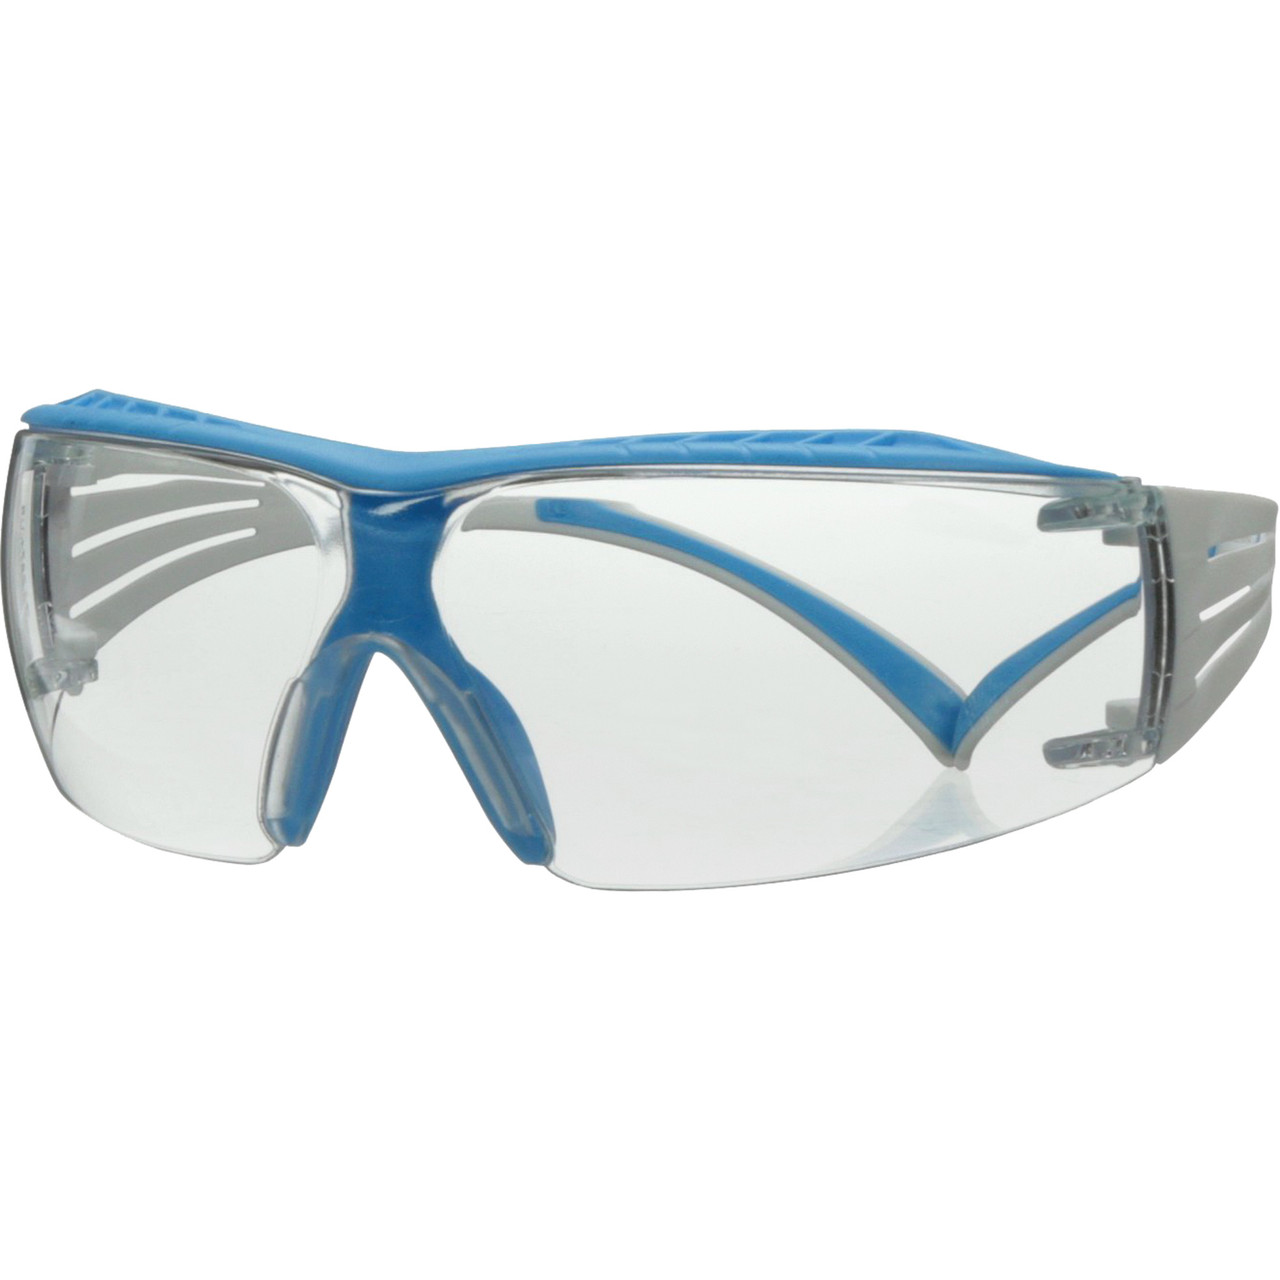 Securefit® Scotchgard® 400X Series Safety Glasses w/Clear Lens  SF401XSGAF-WHT